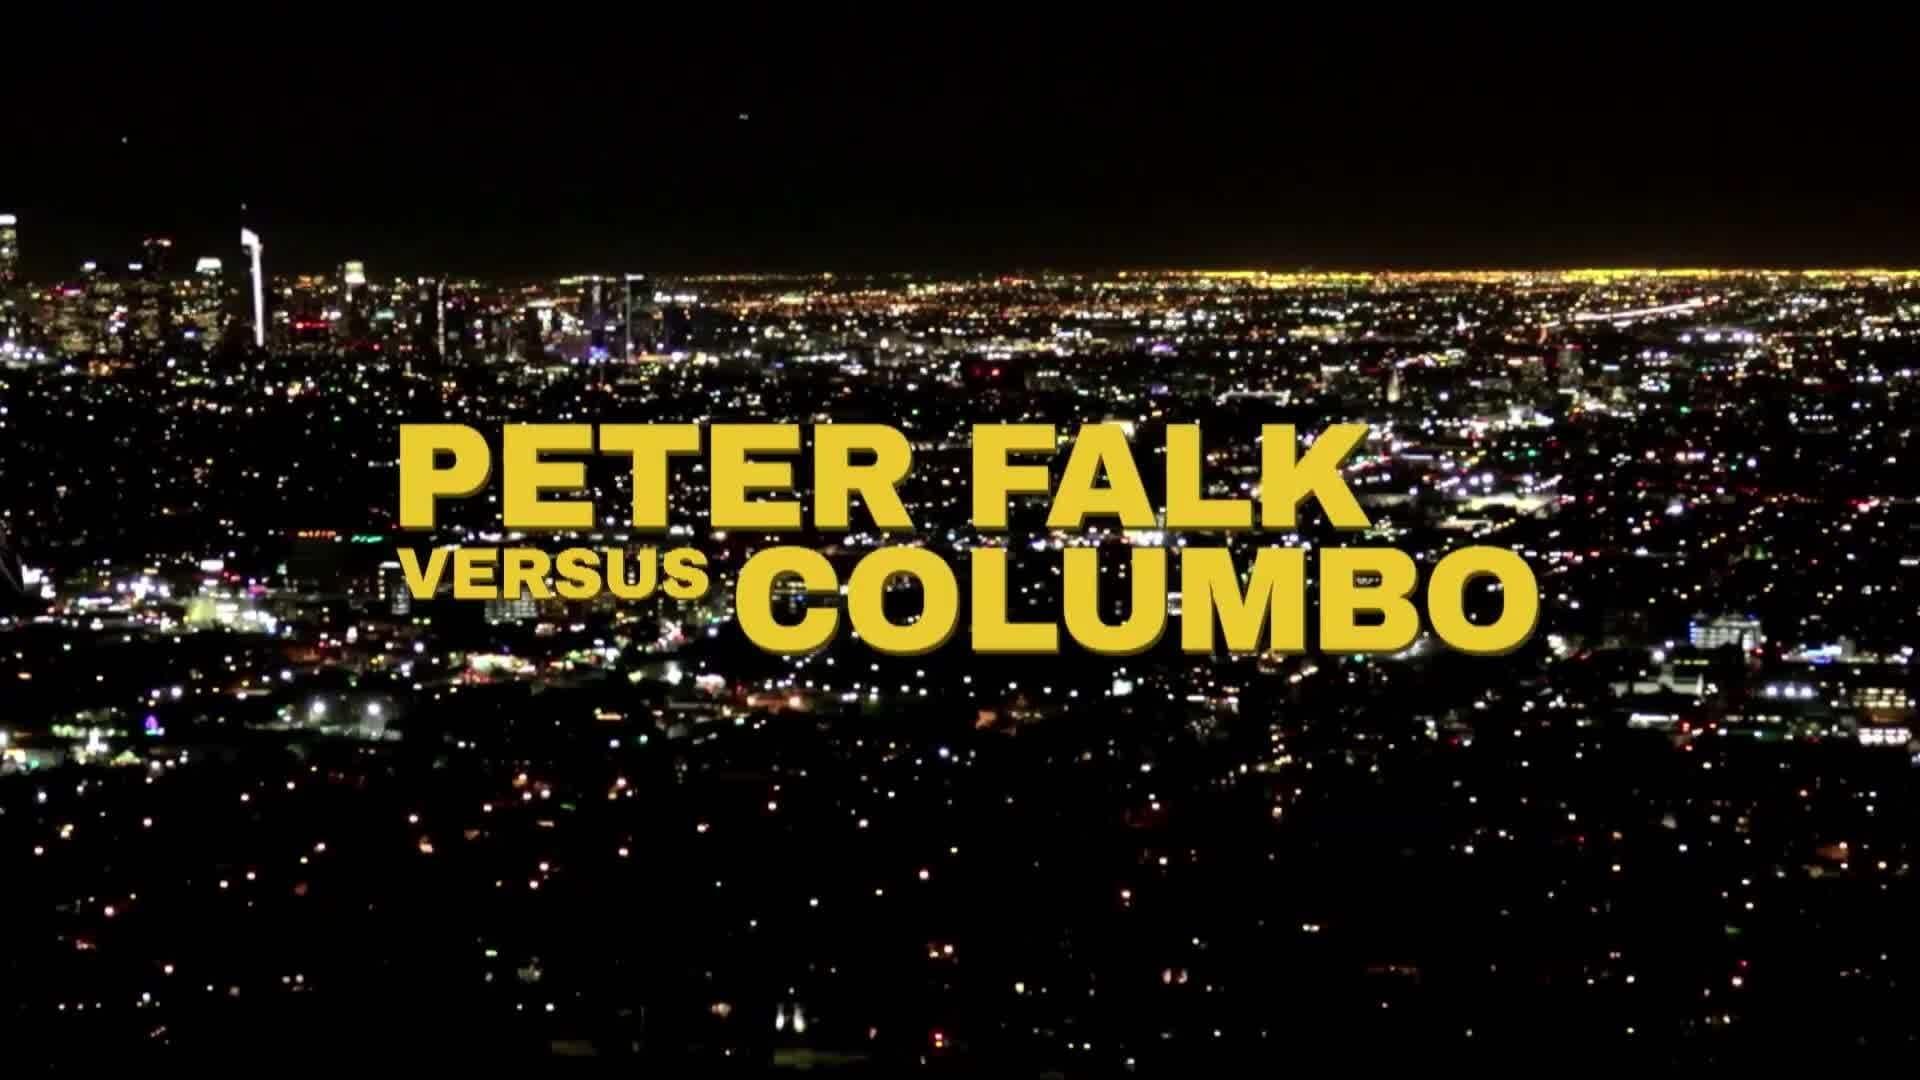 Peter Falk Versus Columbo backdrop